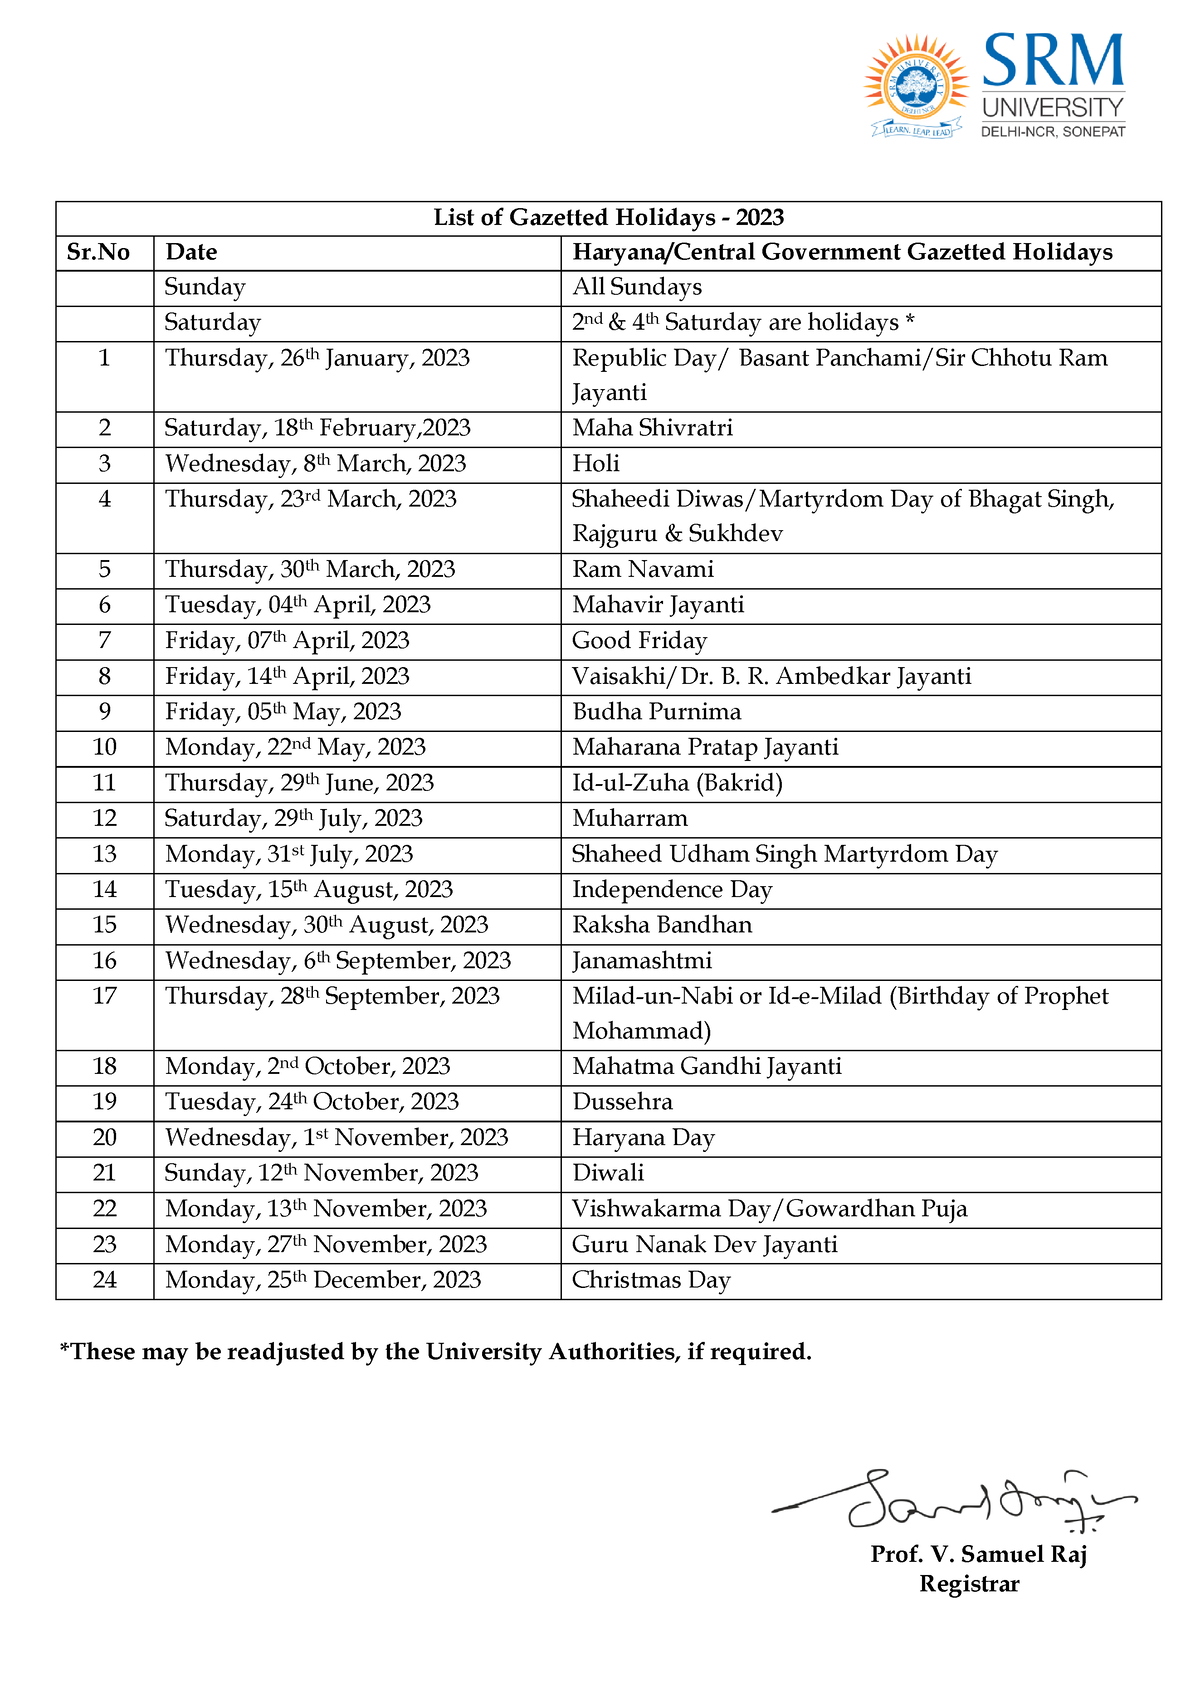 List of Gazetted Holidays 2023 for SRM University Delhi NCR Sonepat